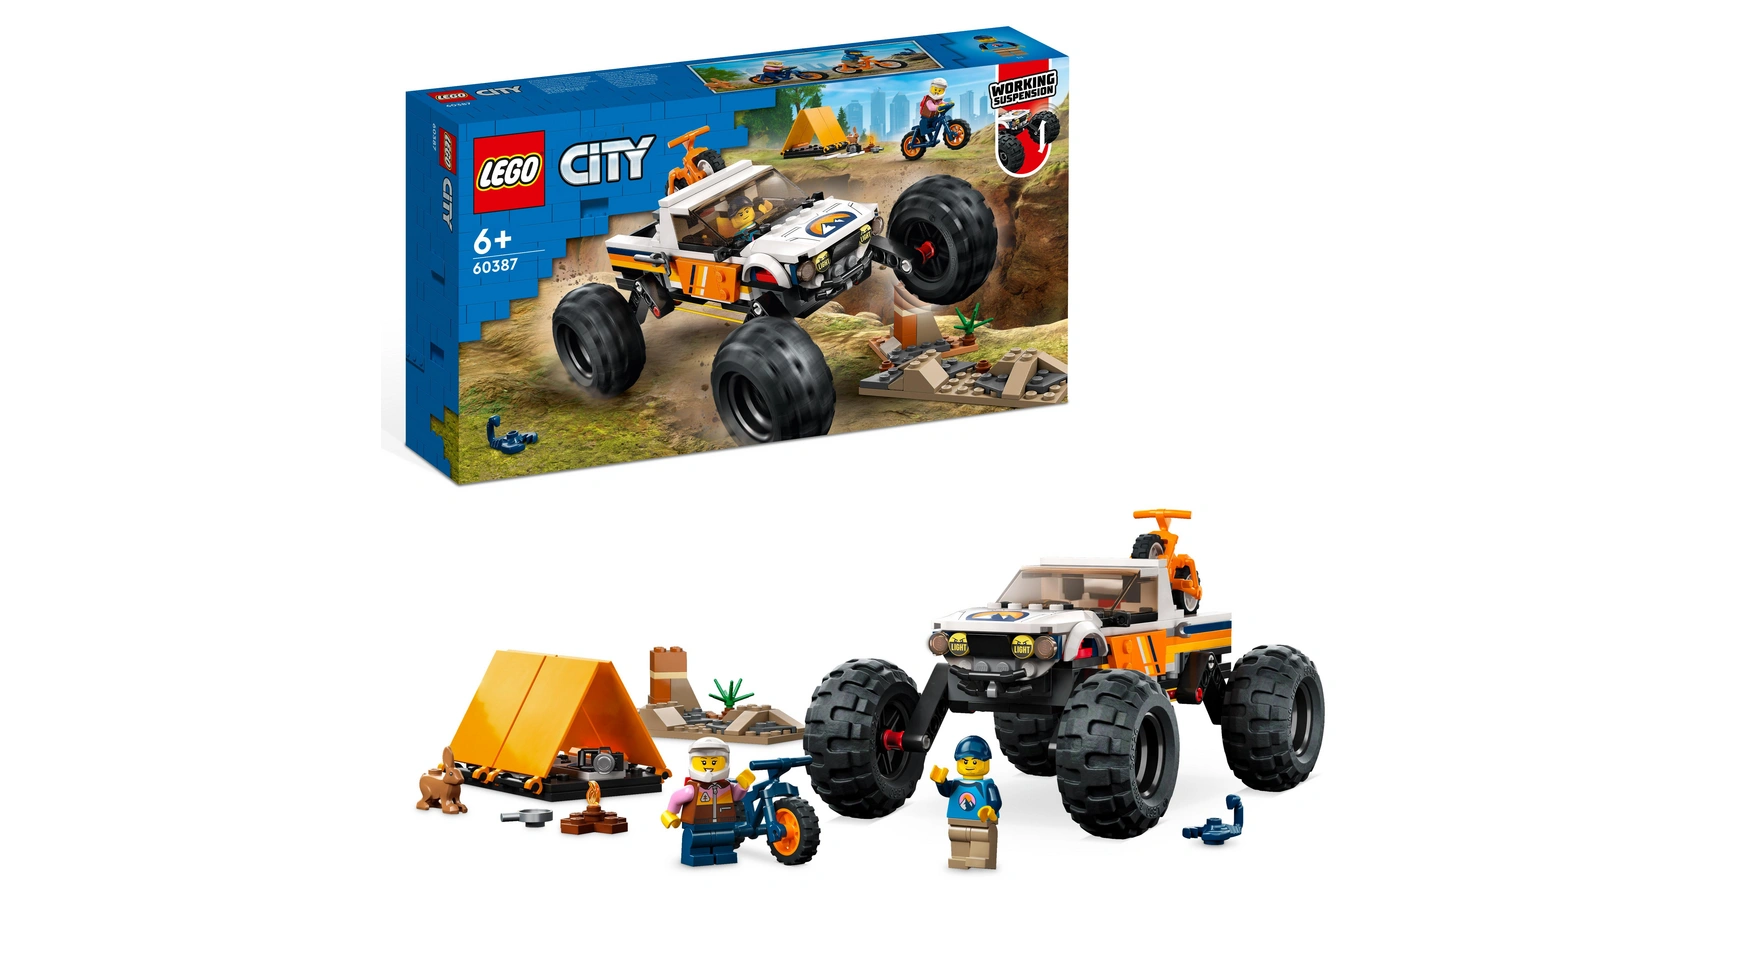 Lego City Приключение по бездорожью 1 22 amgg63 g63 6 6 big tire alloy off road vehicle model diecast